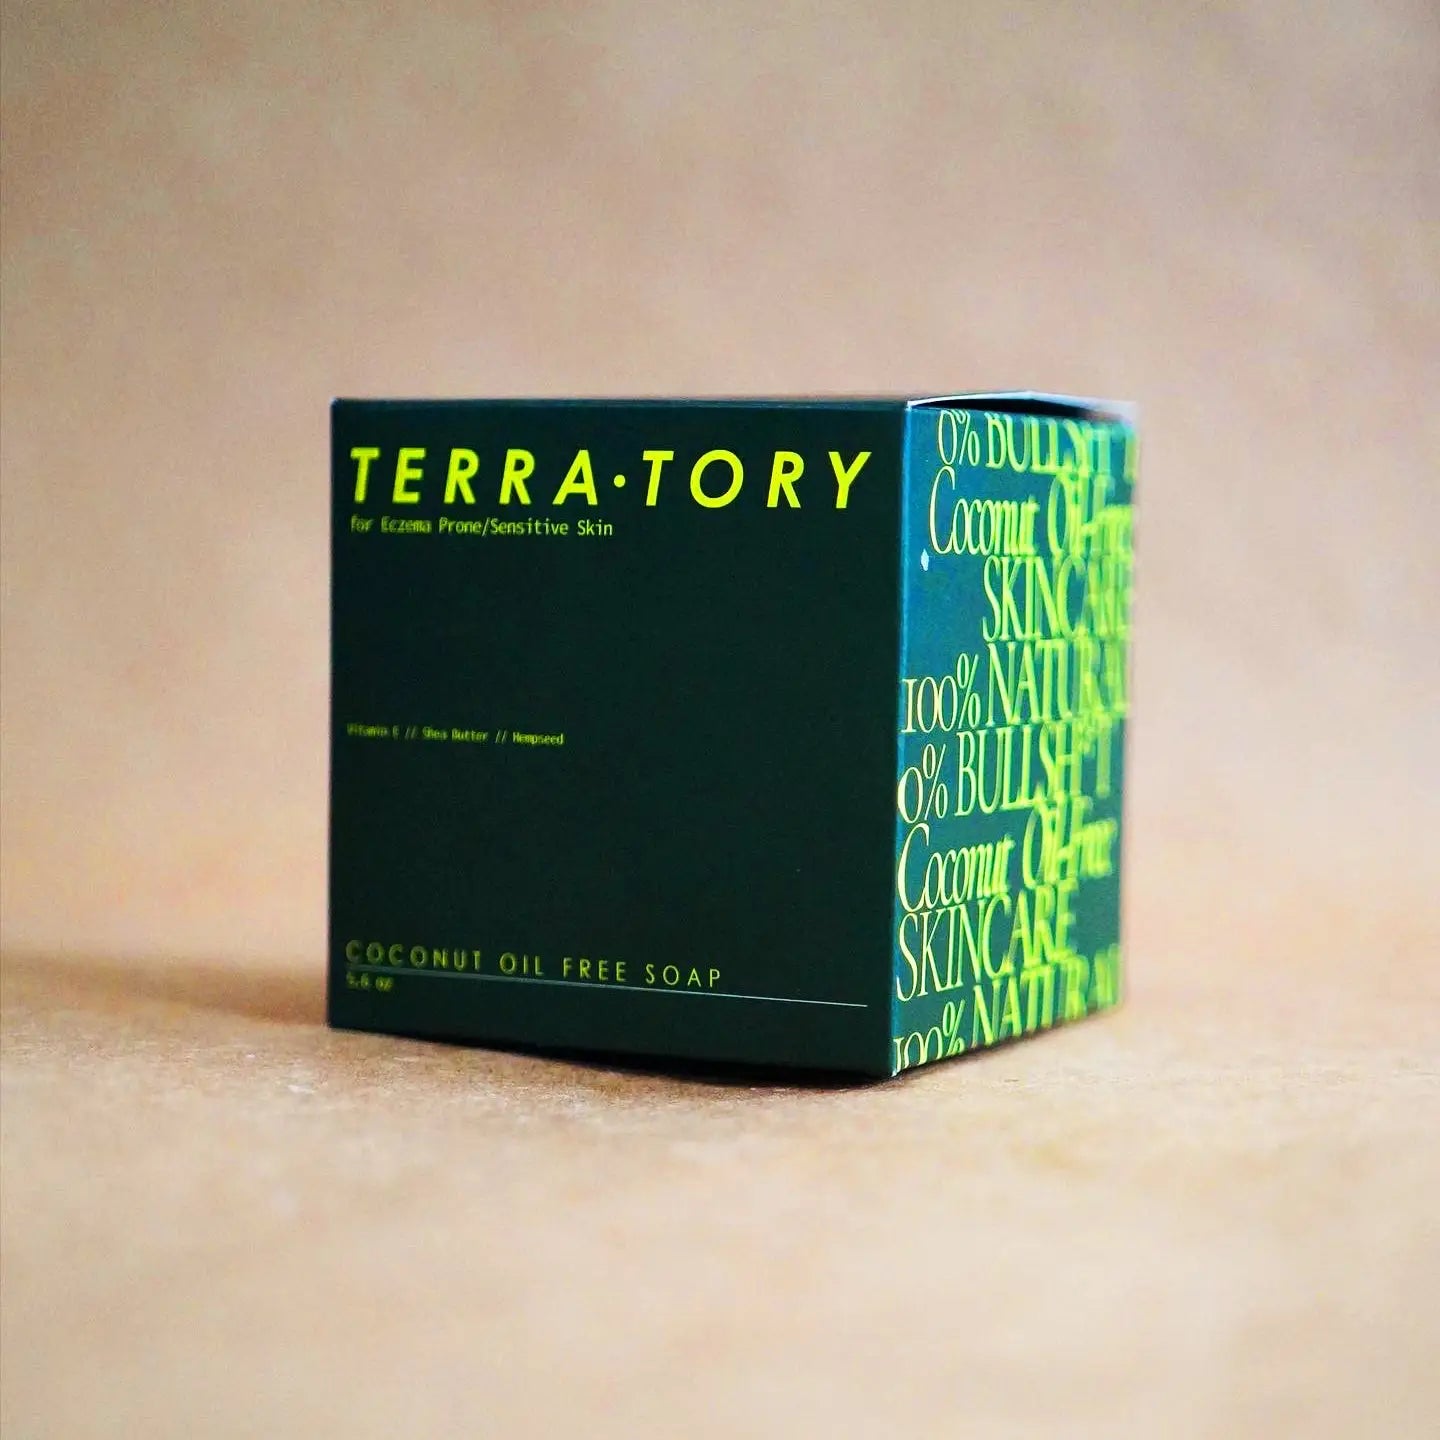 Terra - Tory Skincare Plantain + Coffee Scrub Soap Cube | Prelude and Dawn Los Angeles, CA